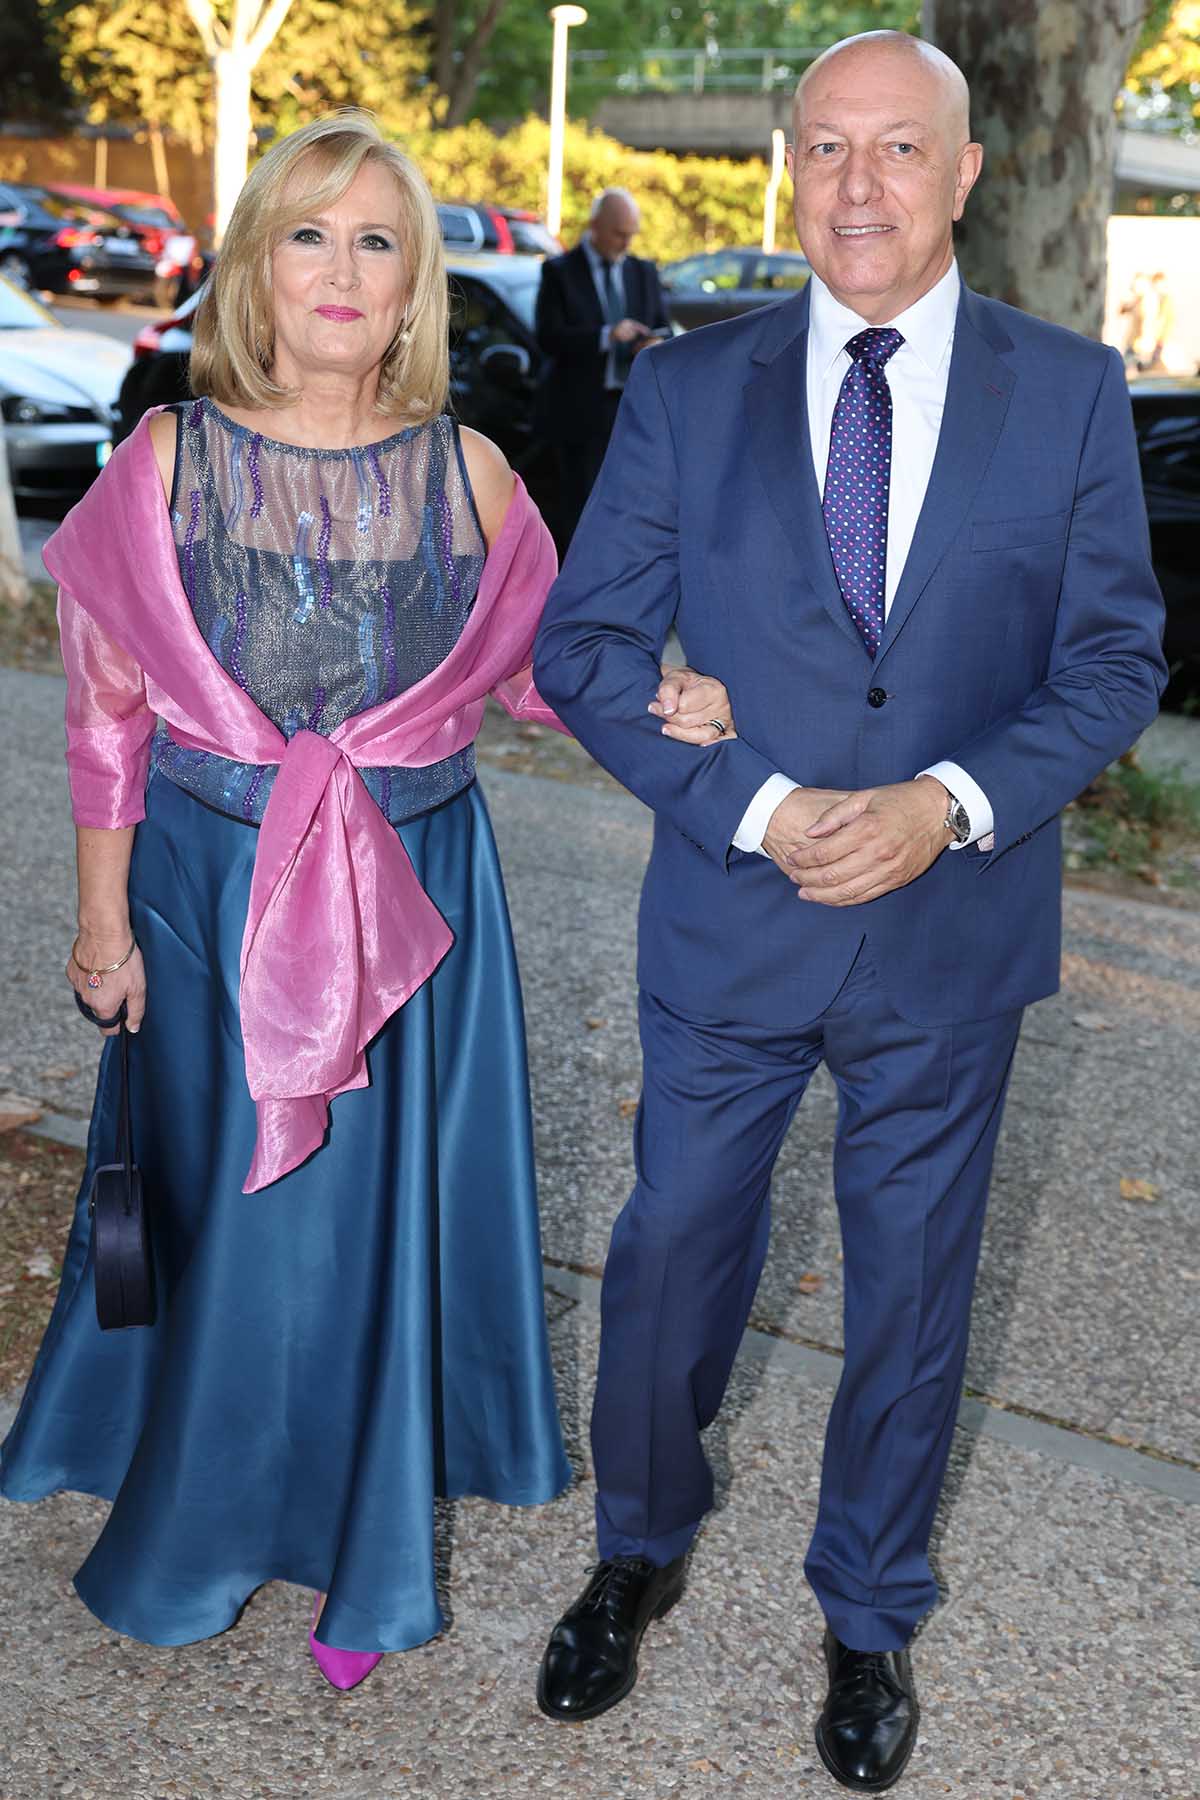 Journalist Nieves Herrero and Guillermo Mercado during wedding of Euprepio Padula in Madrid on Saturday, 24 September 2022.